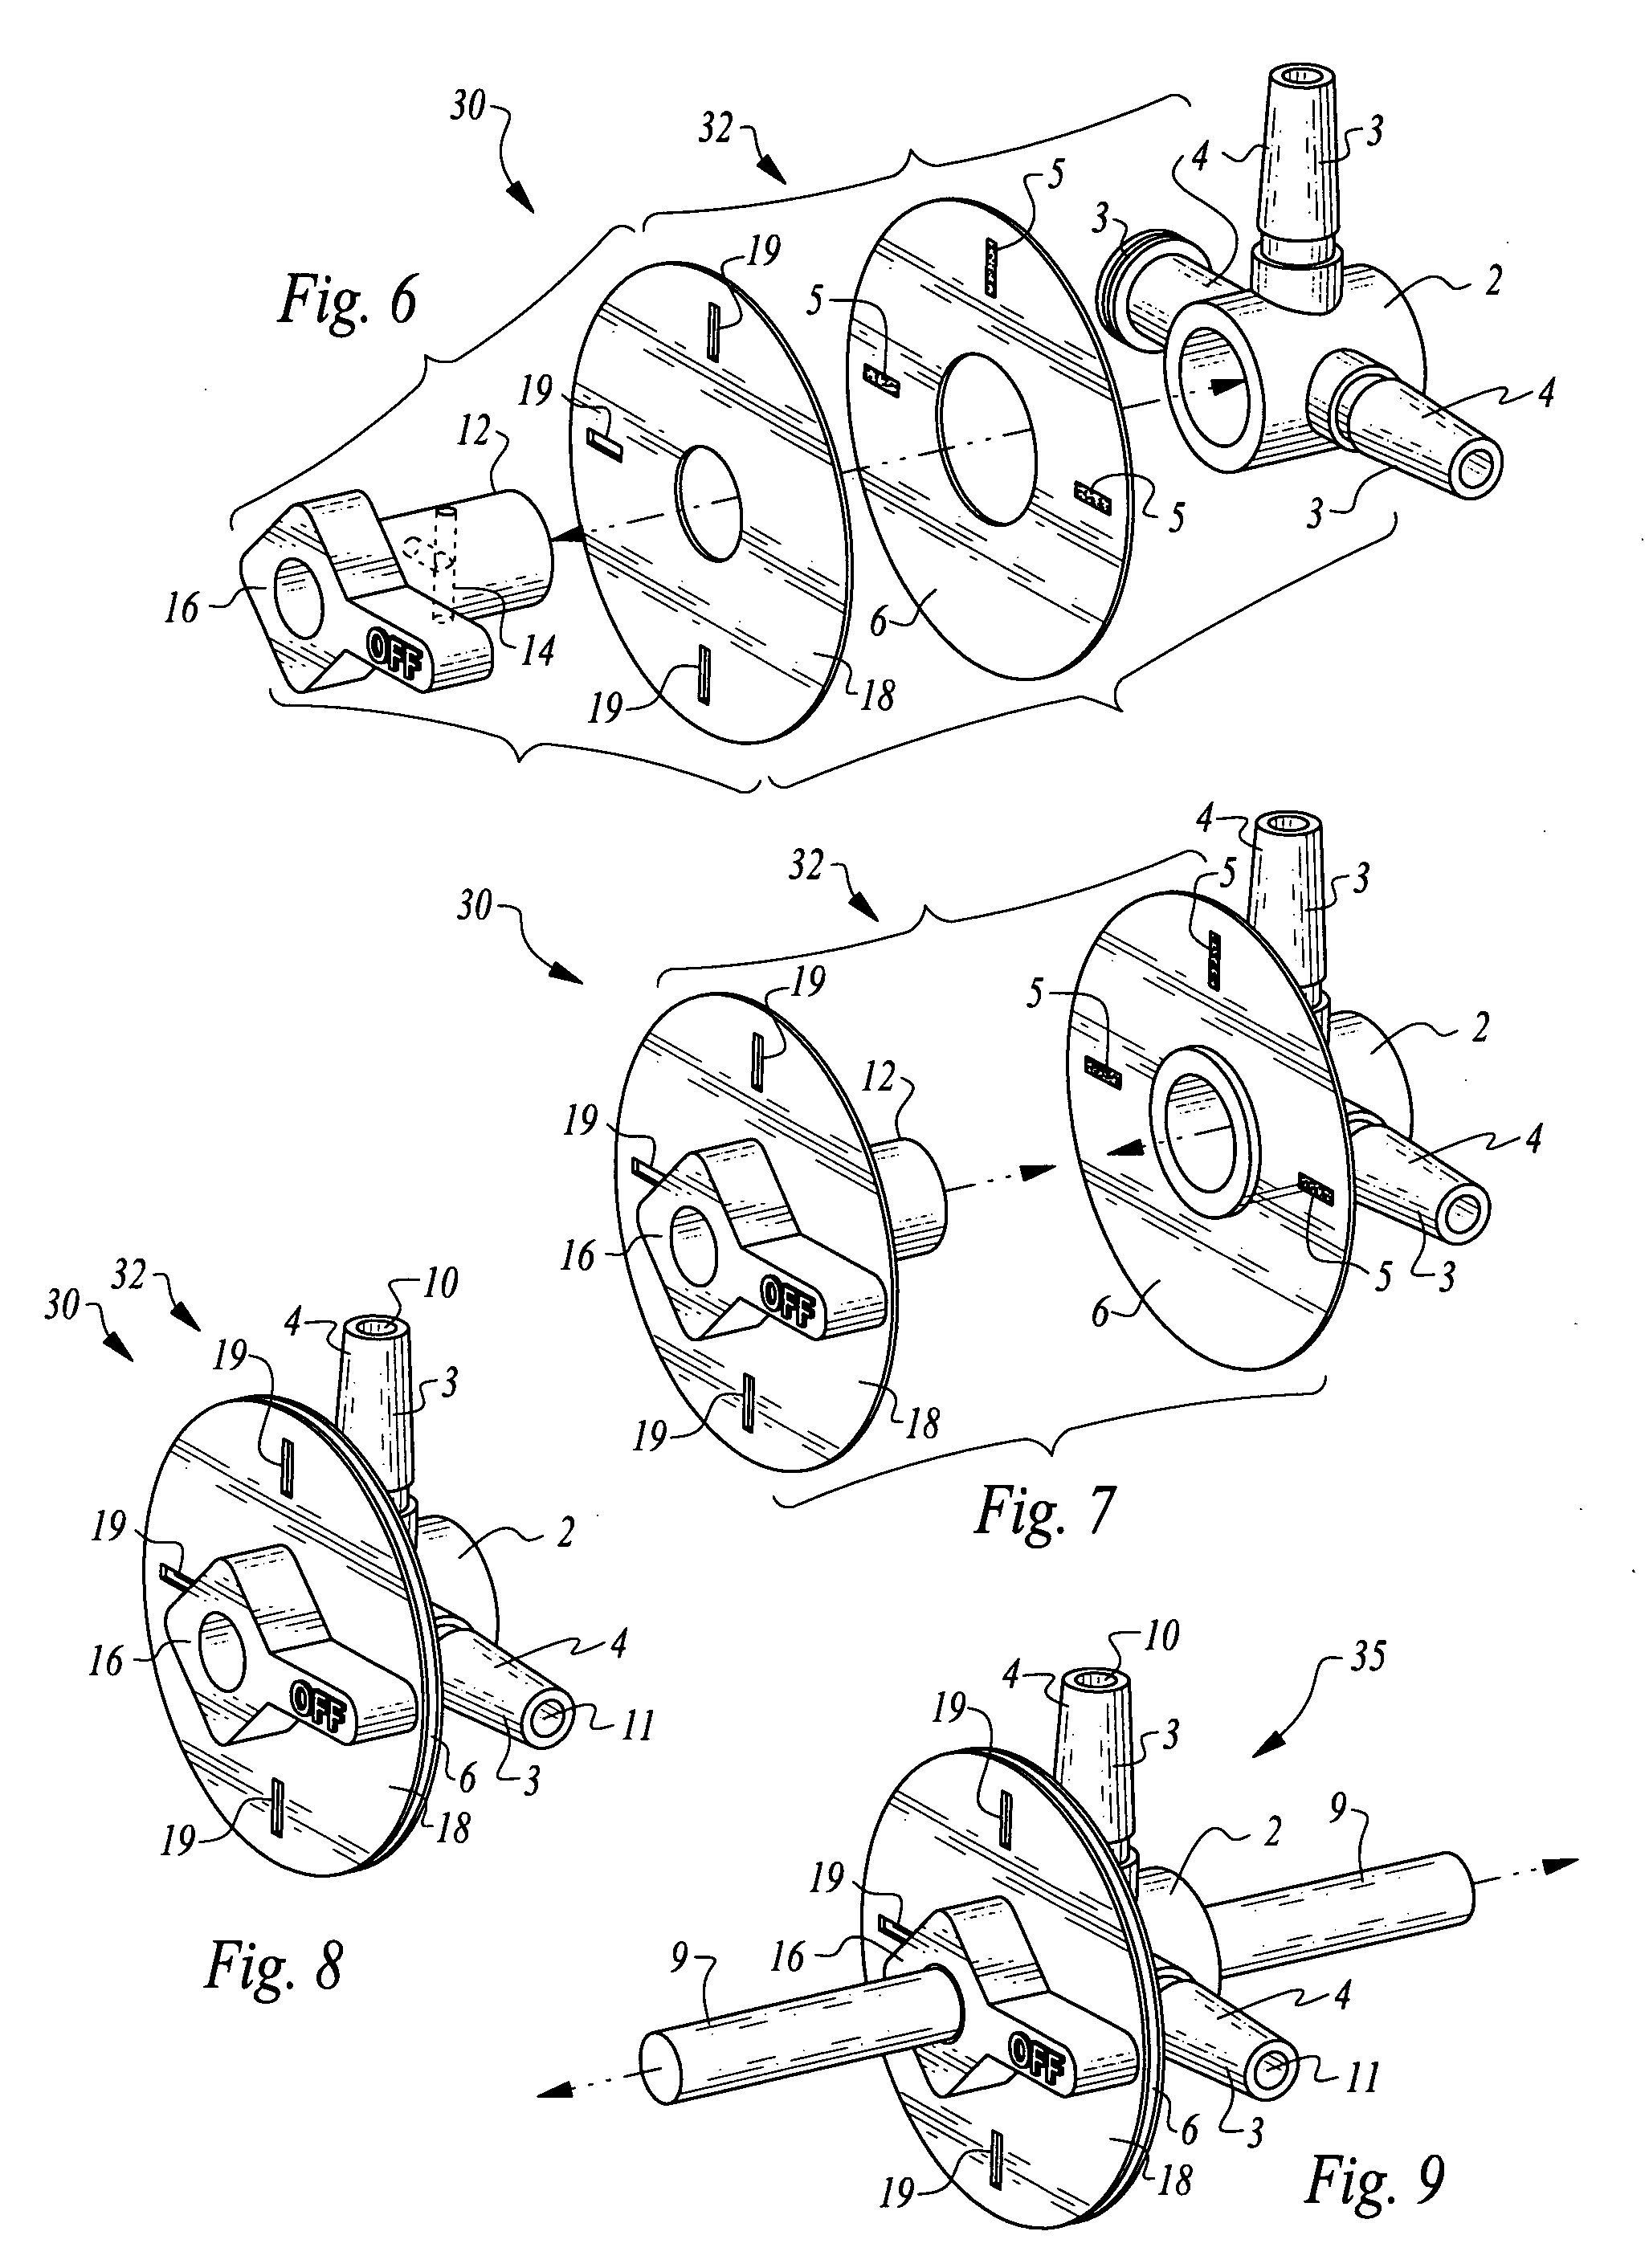 Multi-port stopcock valve and flow designating system